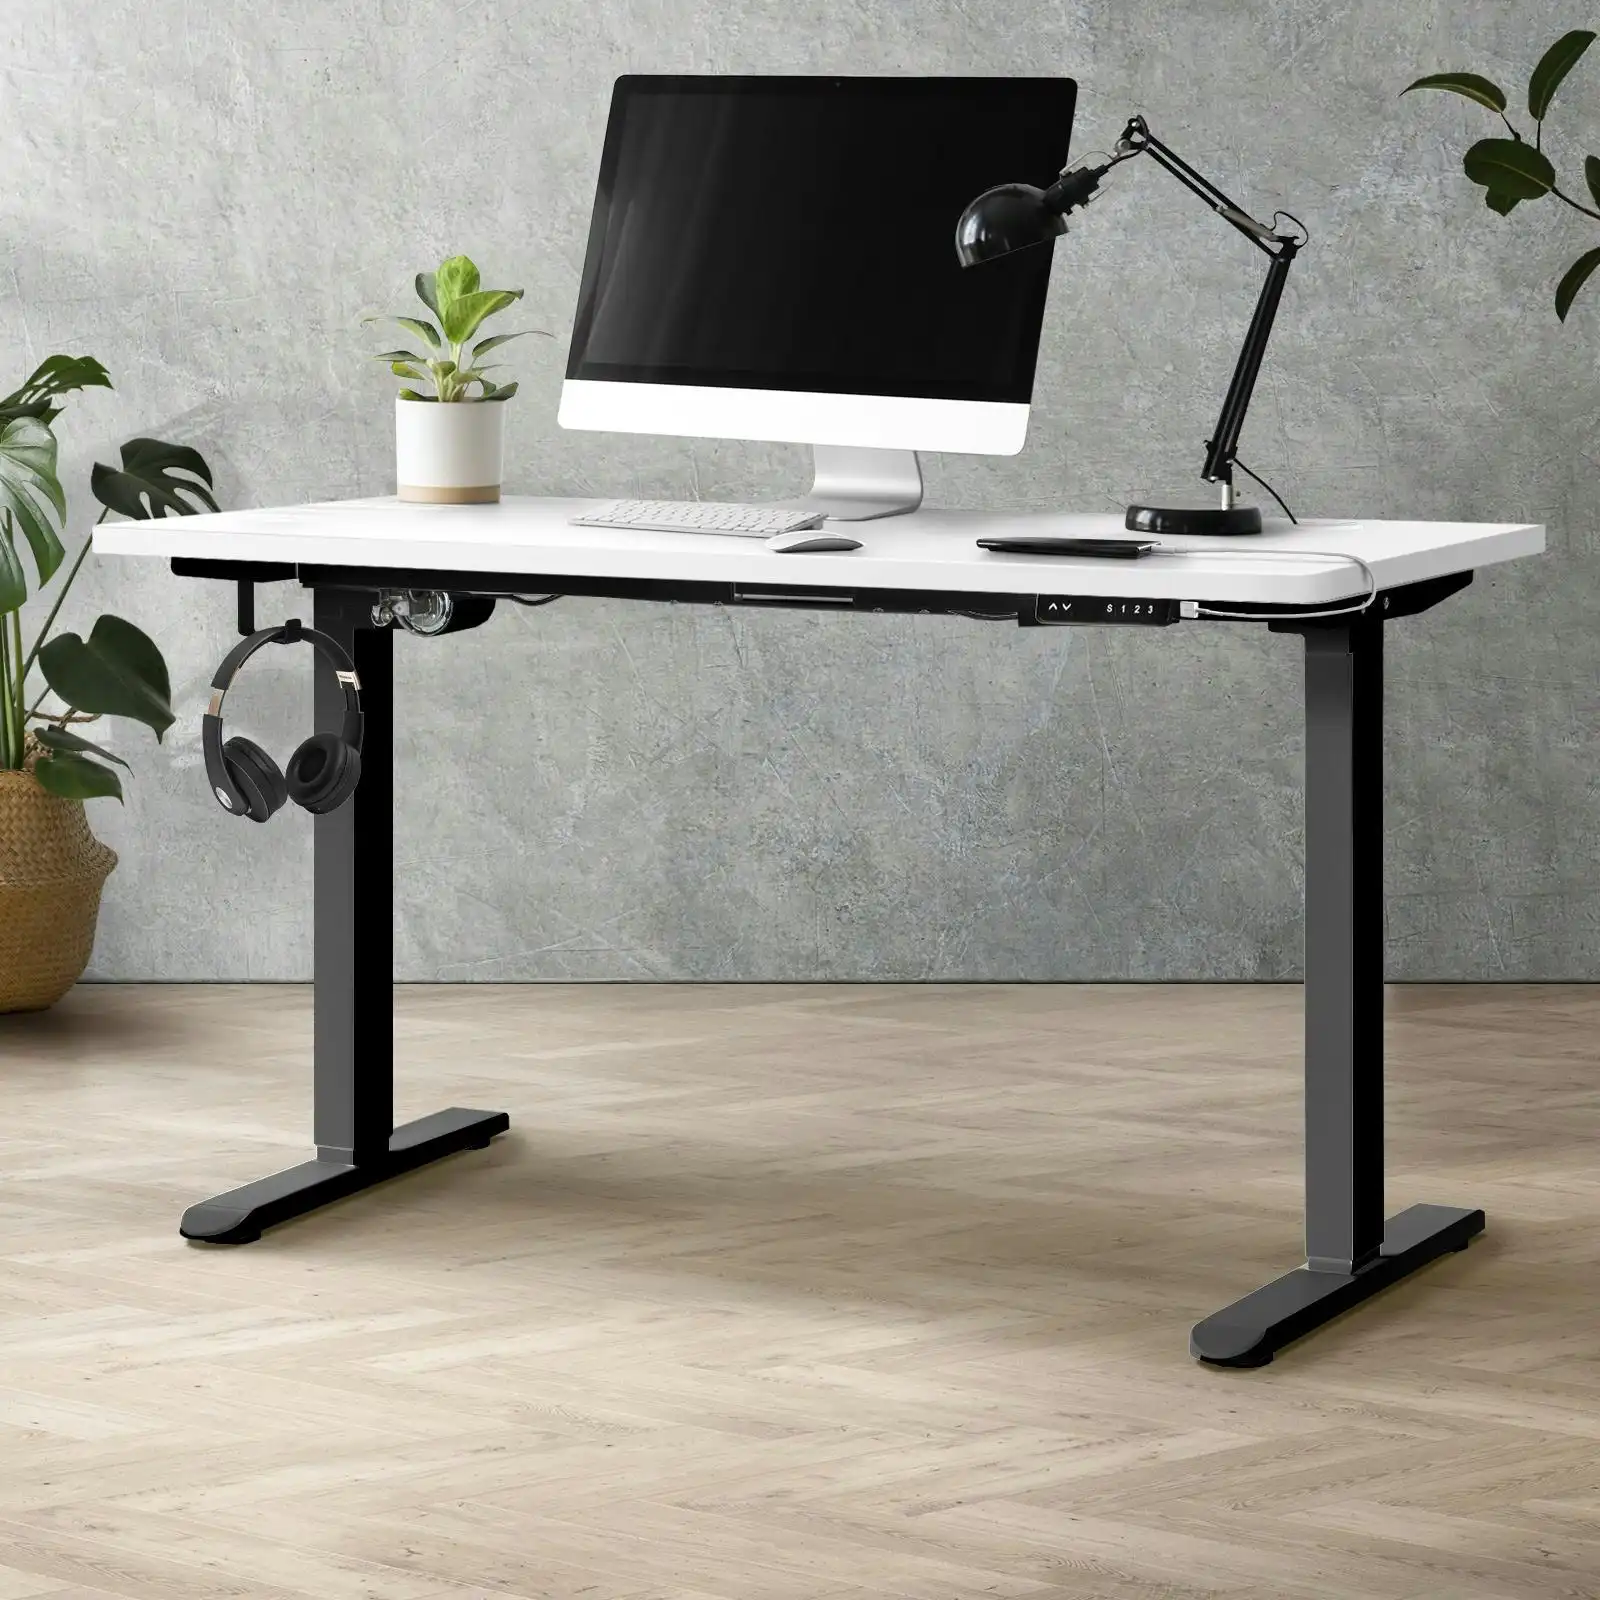 Oikiture 150CM Electric Standing Desk Single Motor Black Frame White Desktop